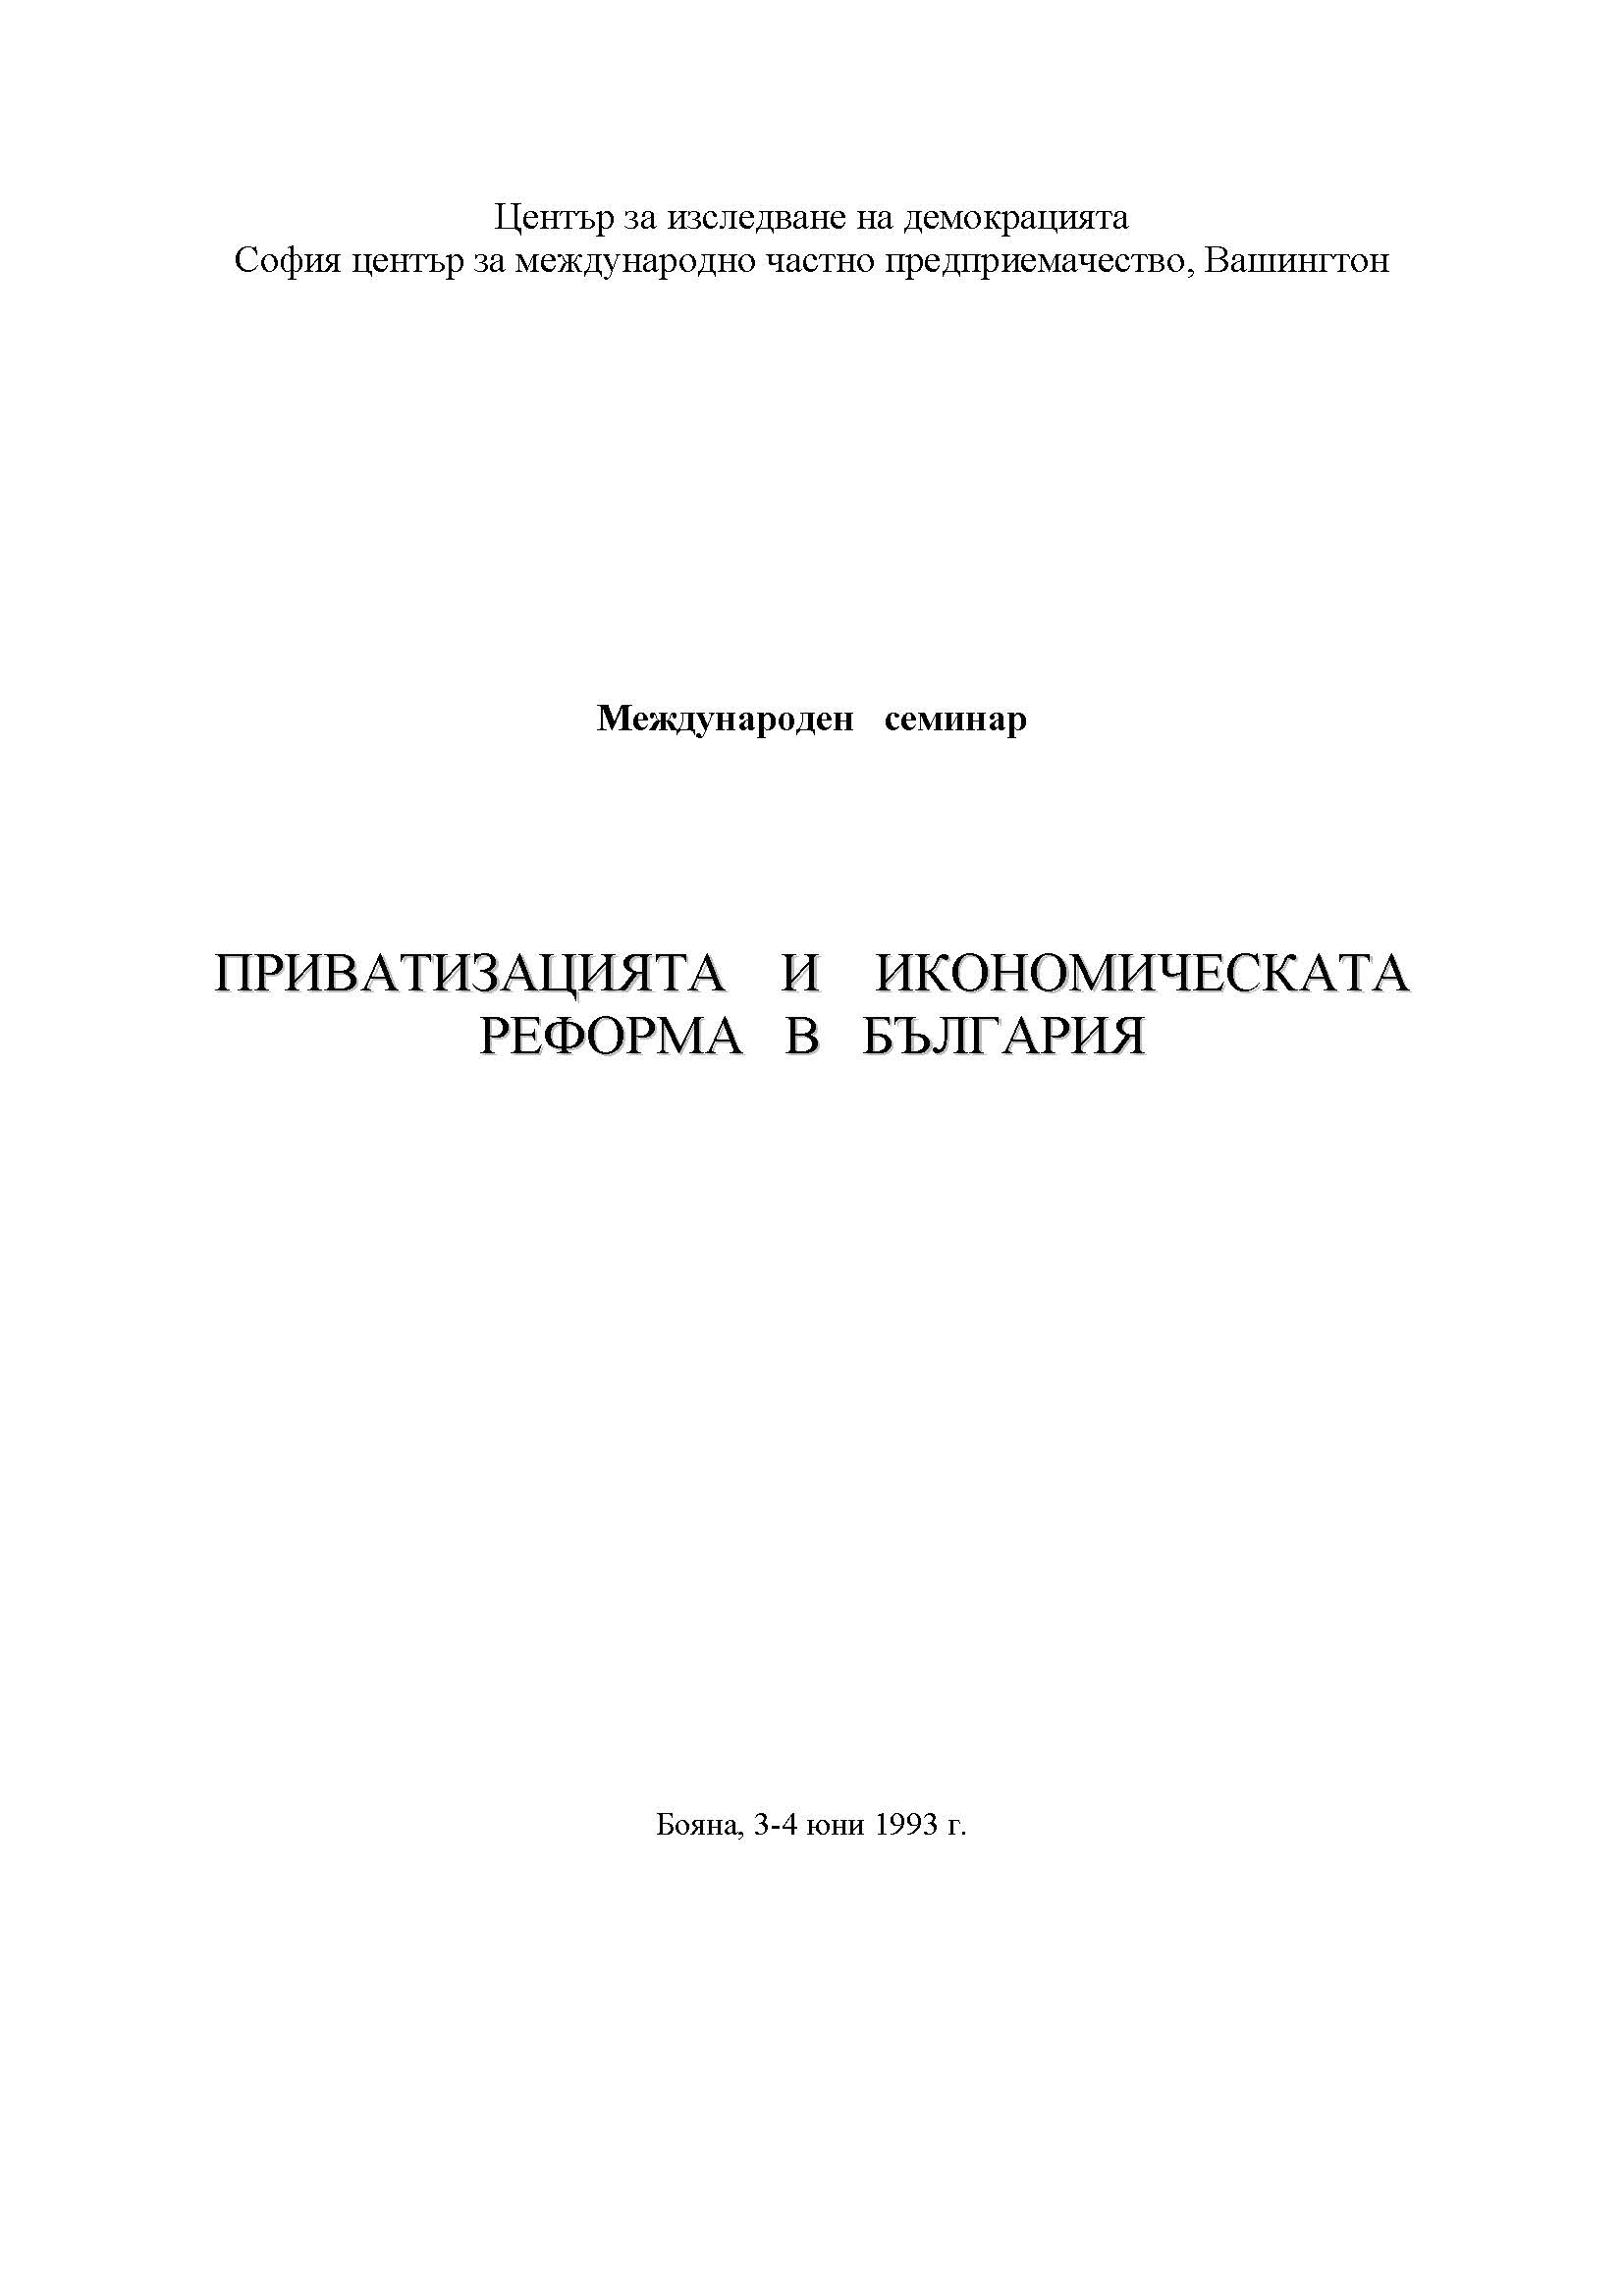 International Seminar: PRIVATIZATION AND ECONOMIC REFORM IN BULGARIA. Boyana, 3-4 June 1993